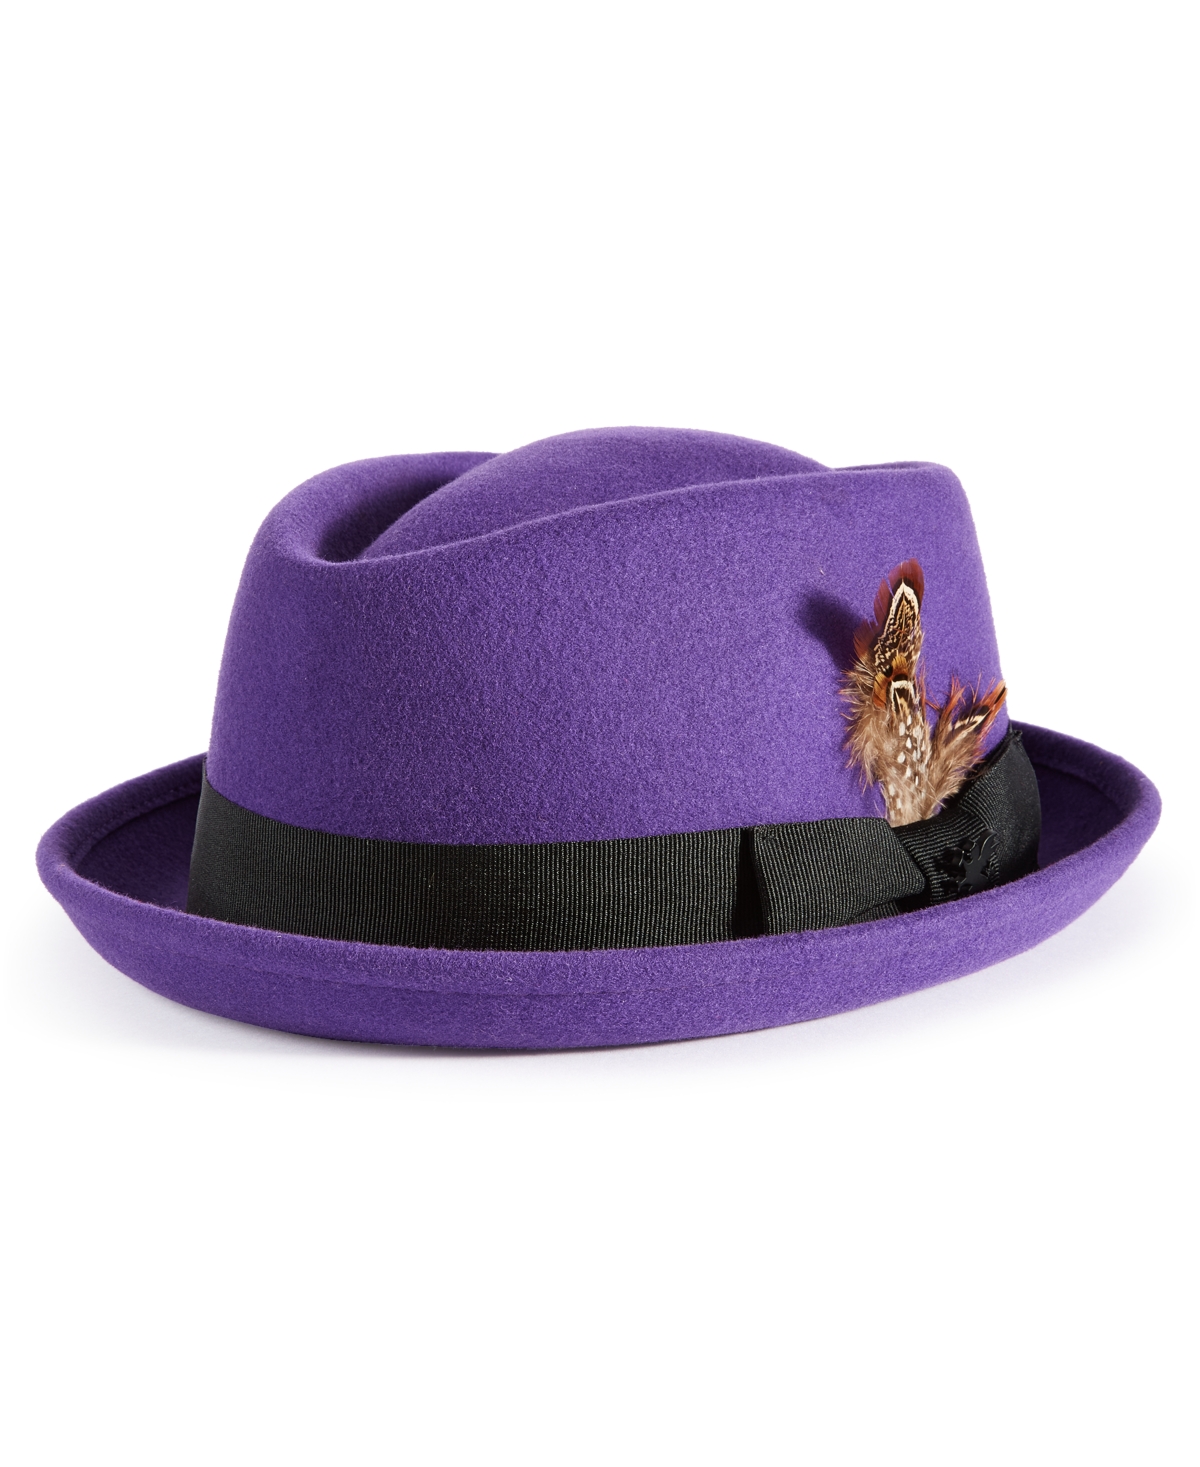 Men's Wool Contrast-Band Pork Pie Fedora Hat - Purple